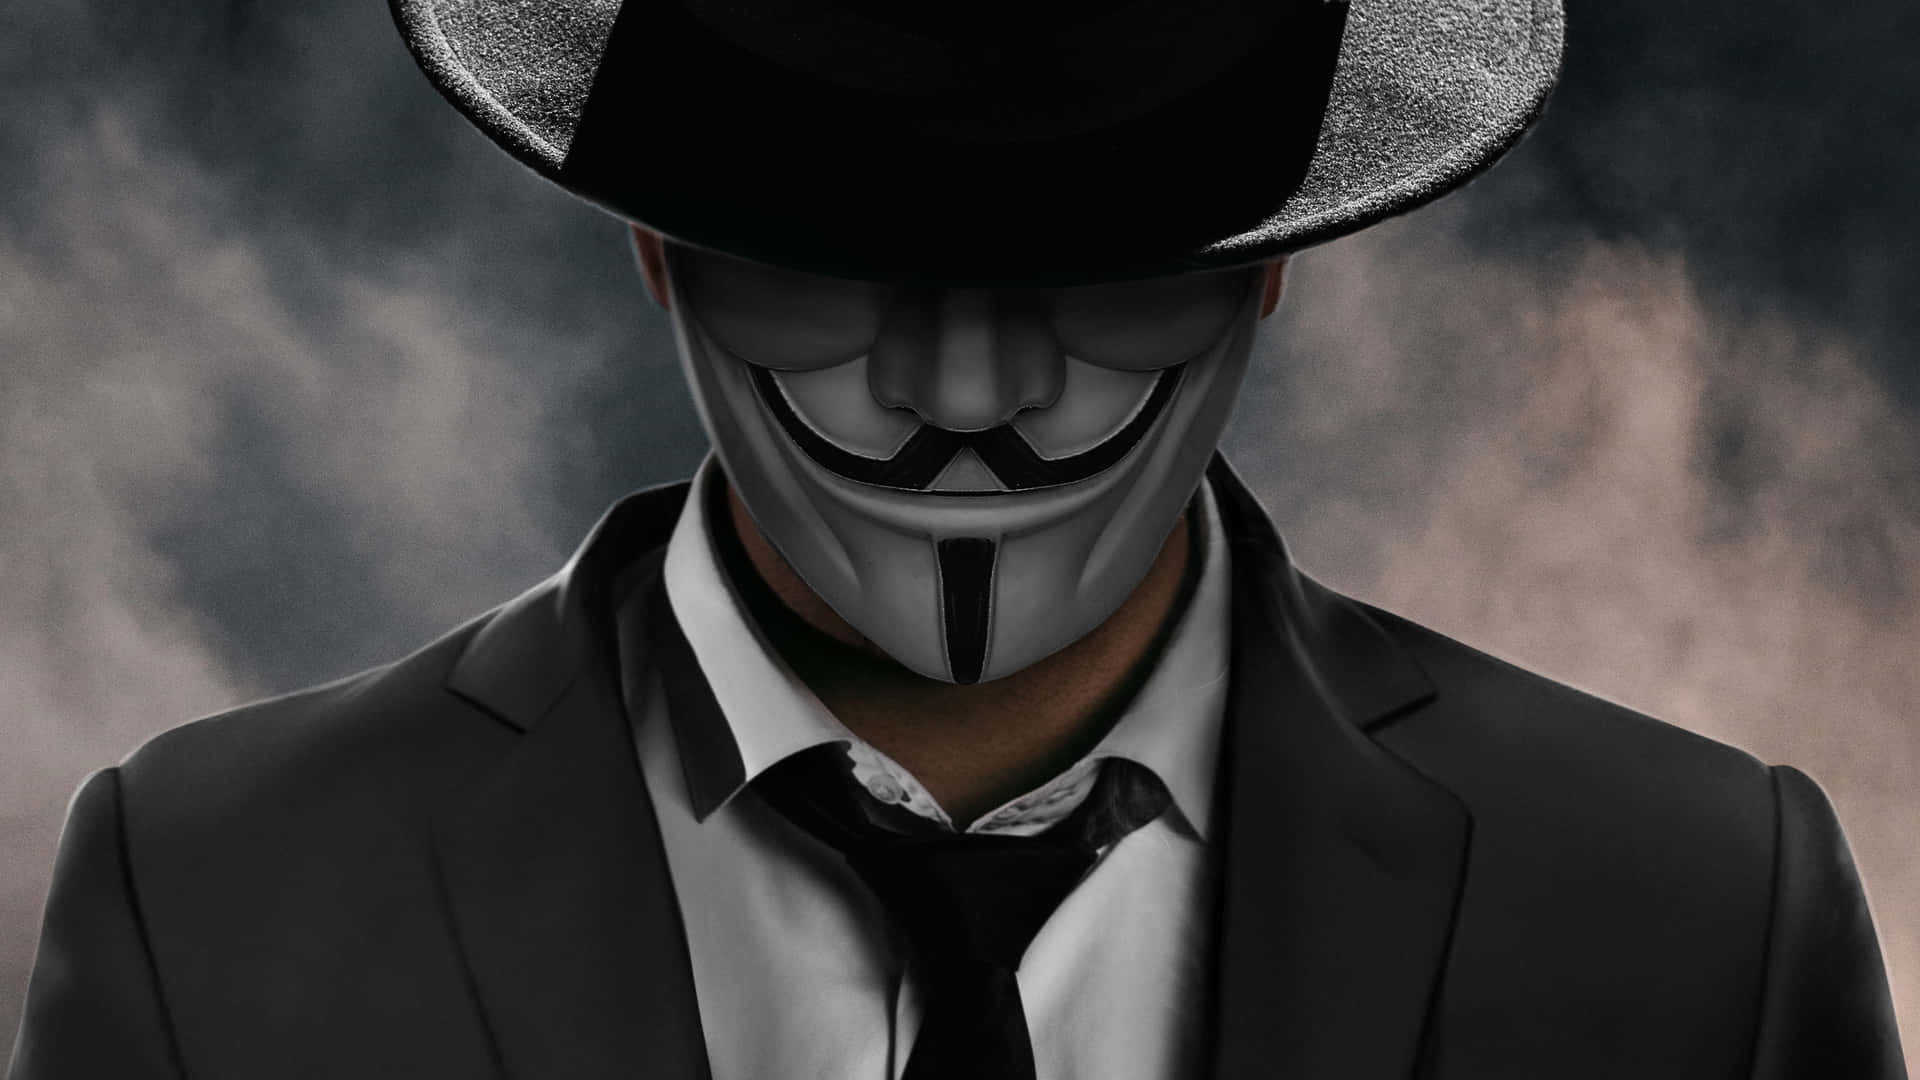 Man In Suit With Joker Face Wallpaper